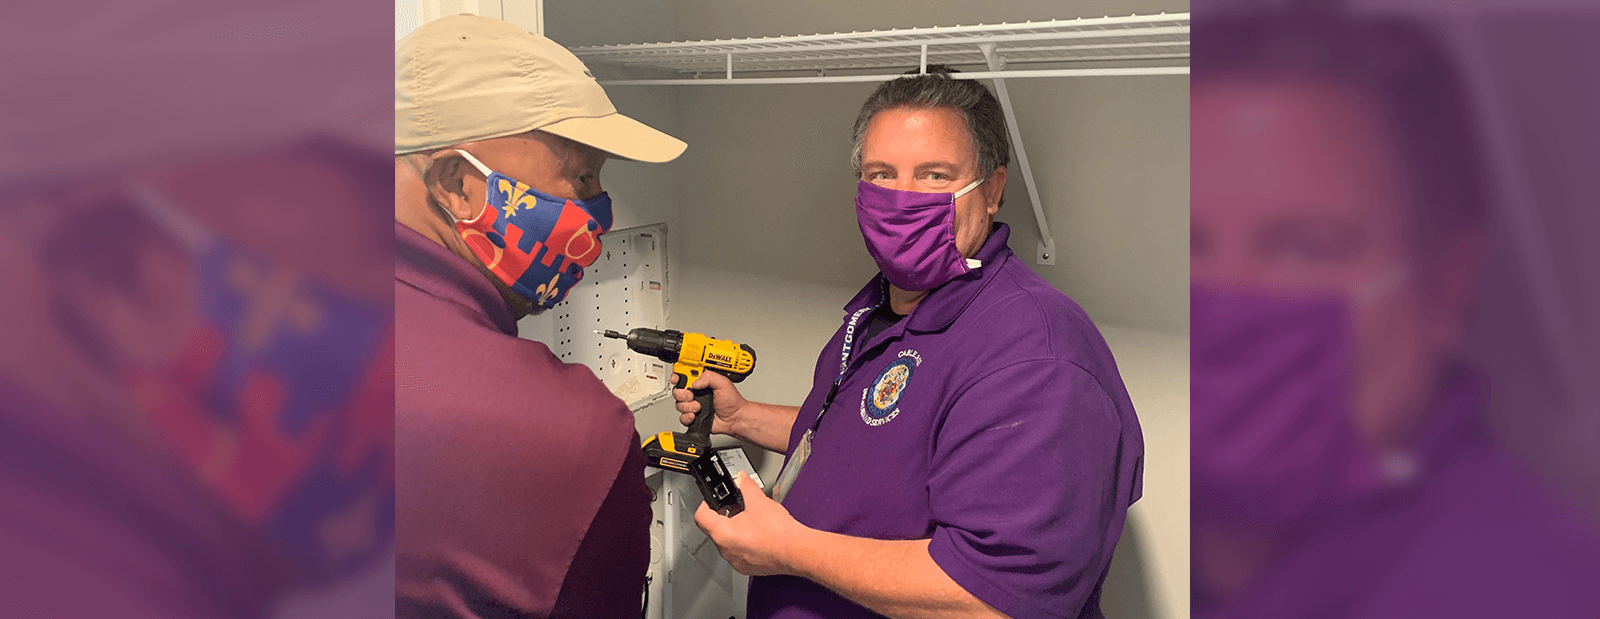 Community Technology Slider - Image of Inspectors Otis and Bryan installing equipment